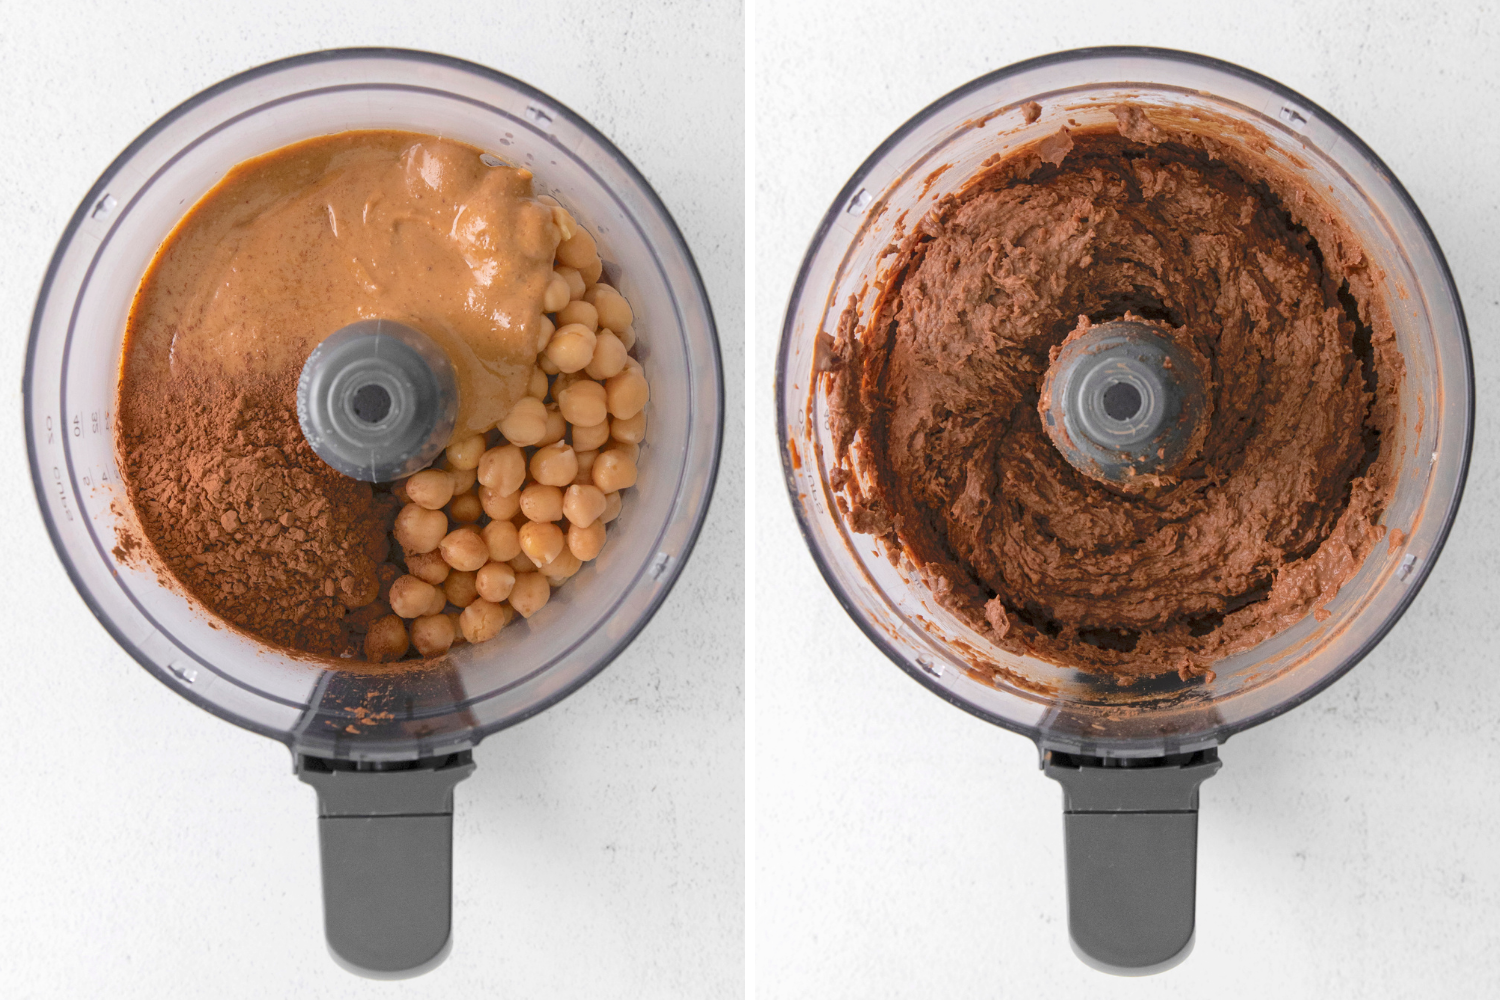 How to make chocolate hummus